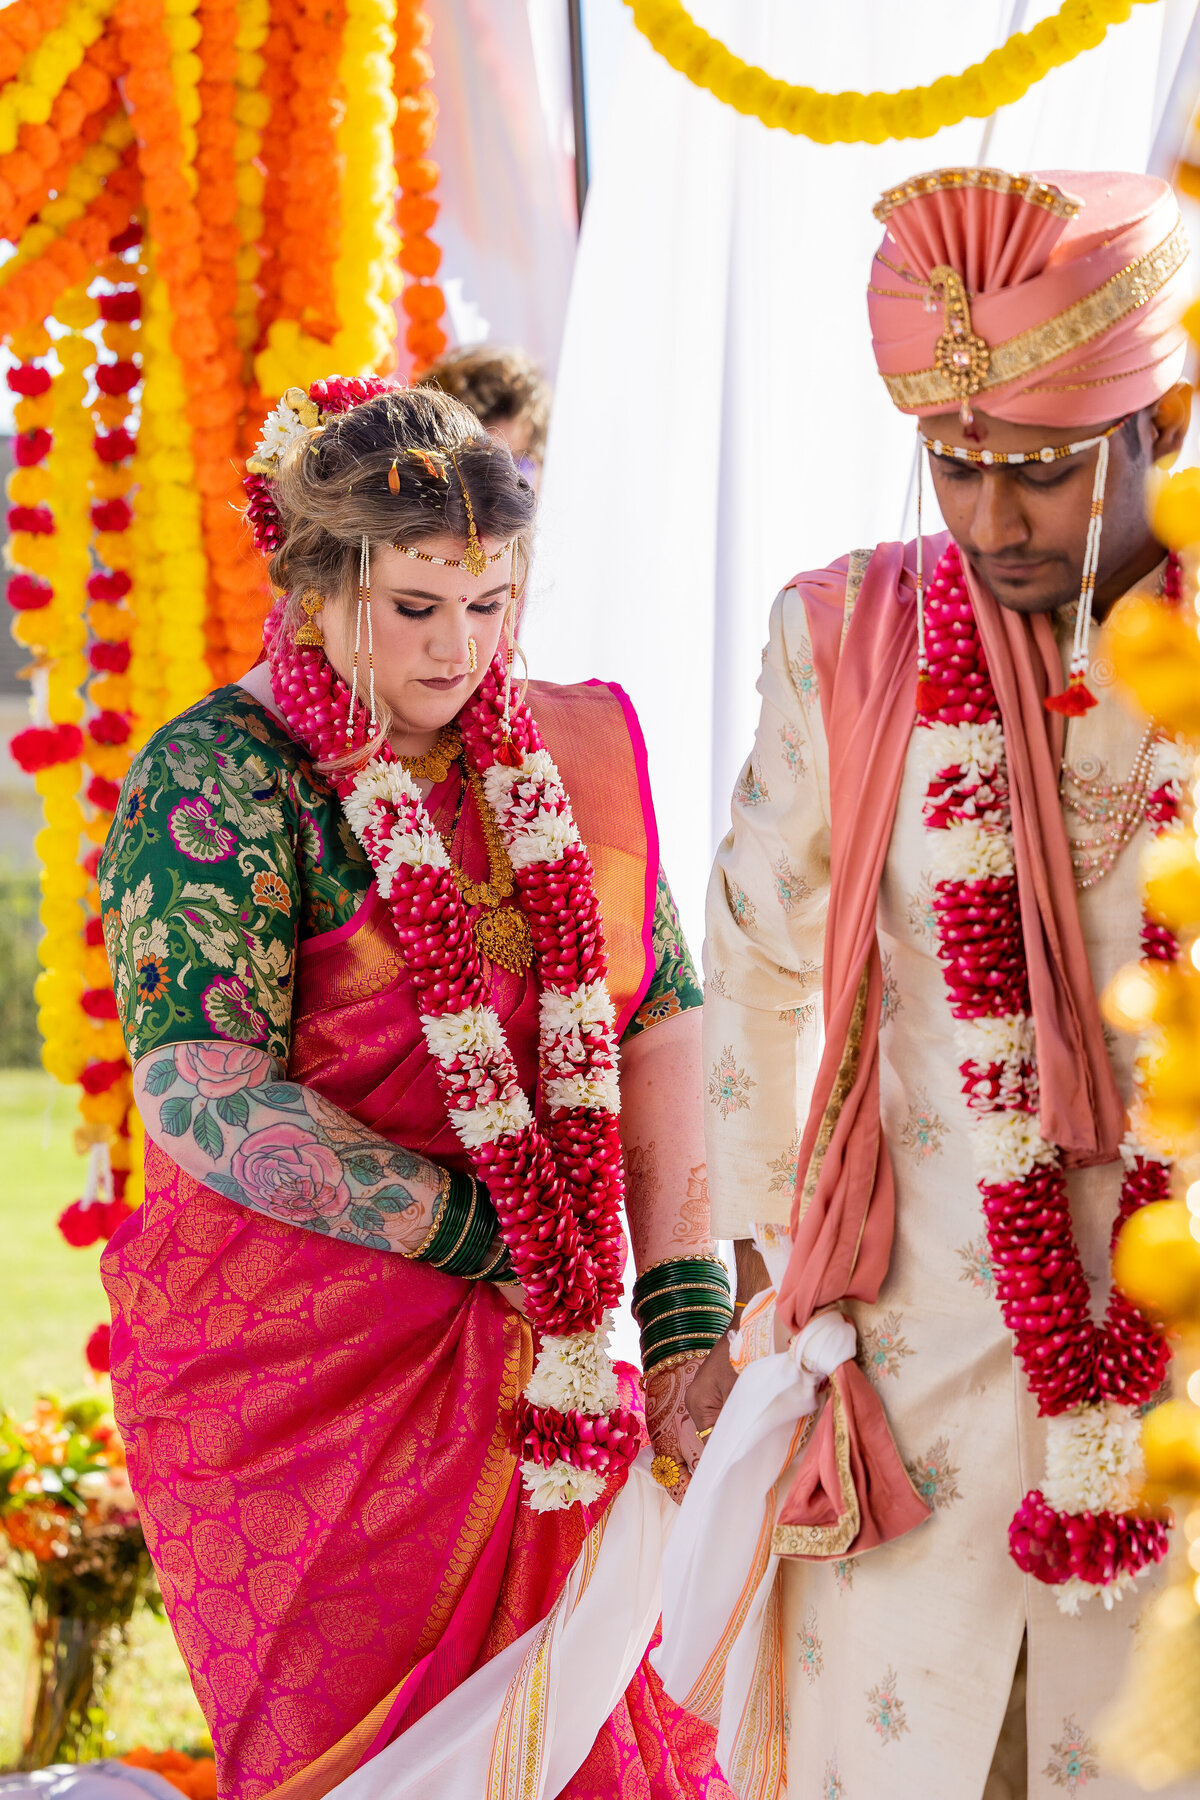 We specialize in Marathi Wedding Photography, Gujarati Wedding Photography, Telugu Weddings, Tamil Weddings.